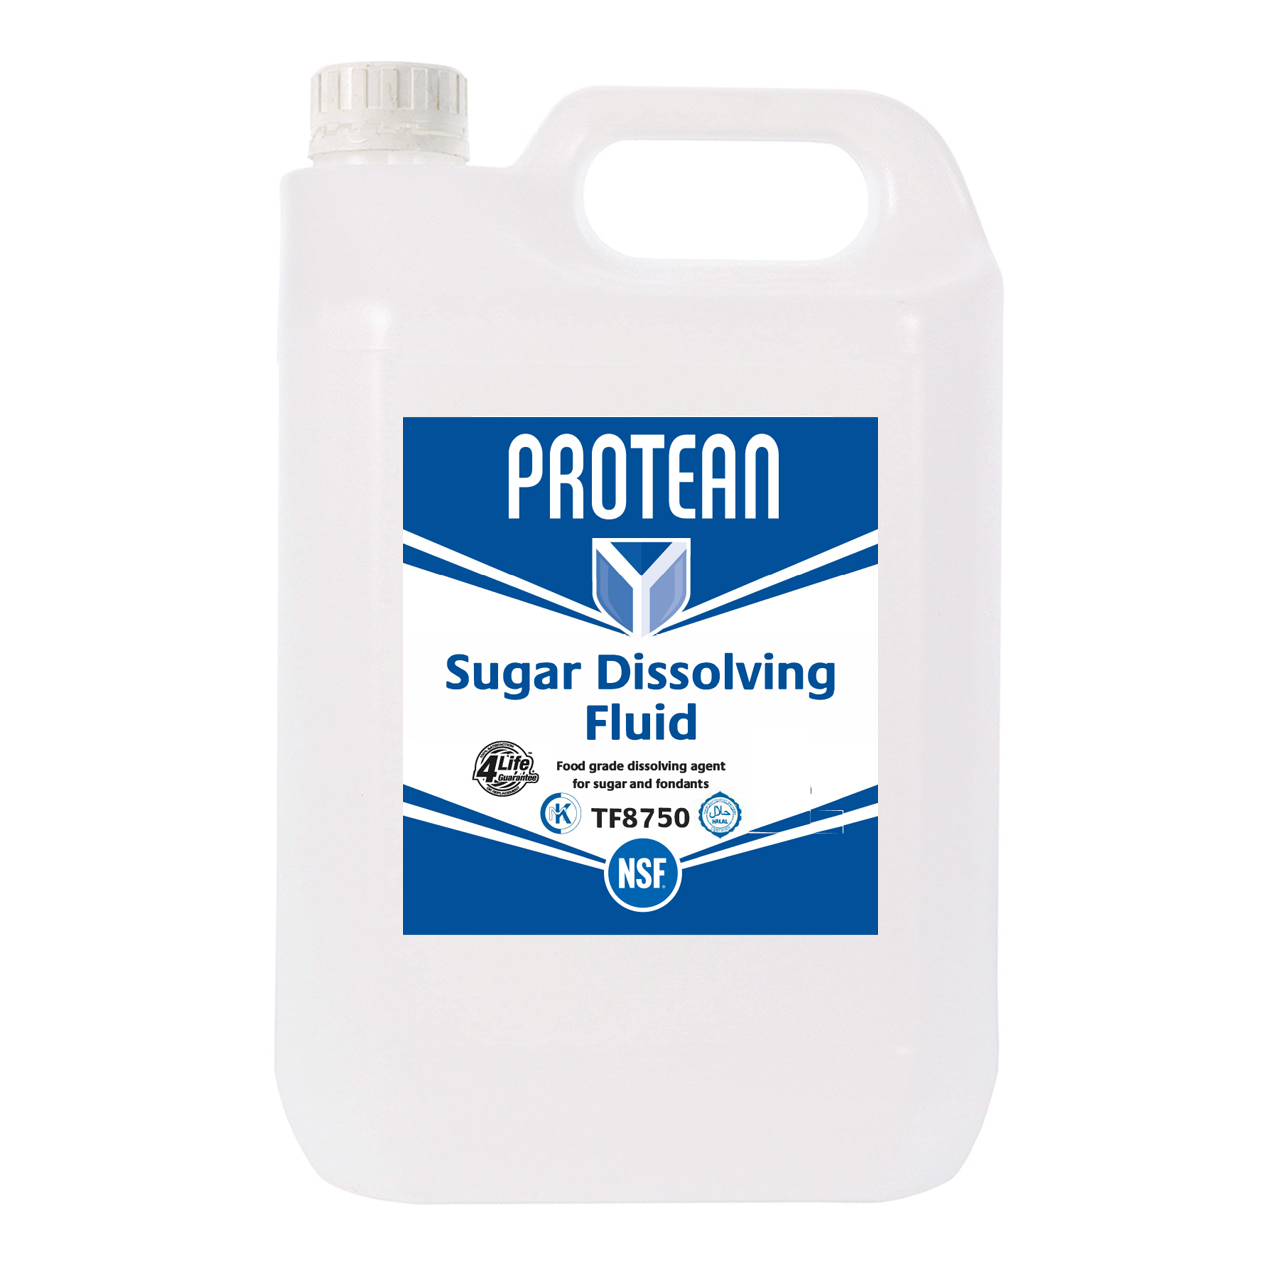 PROTEAN Sugar Dissolving Fluid 5L - TF8750 - Box of 4